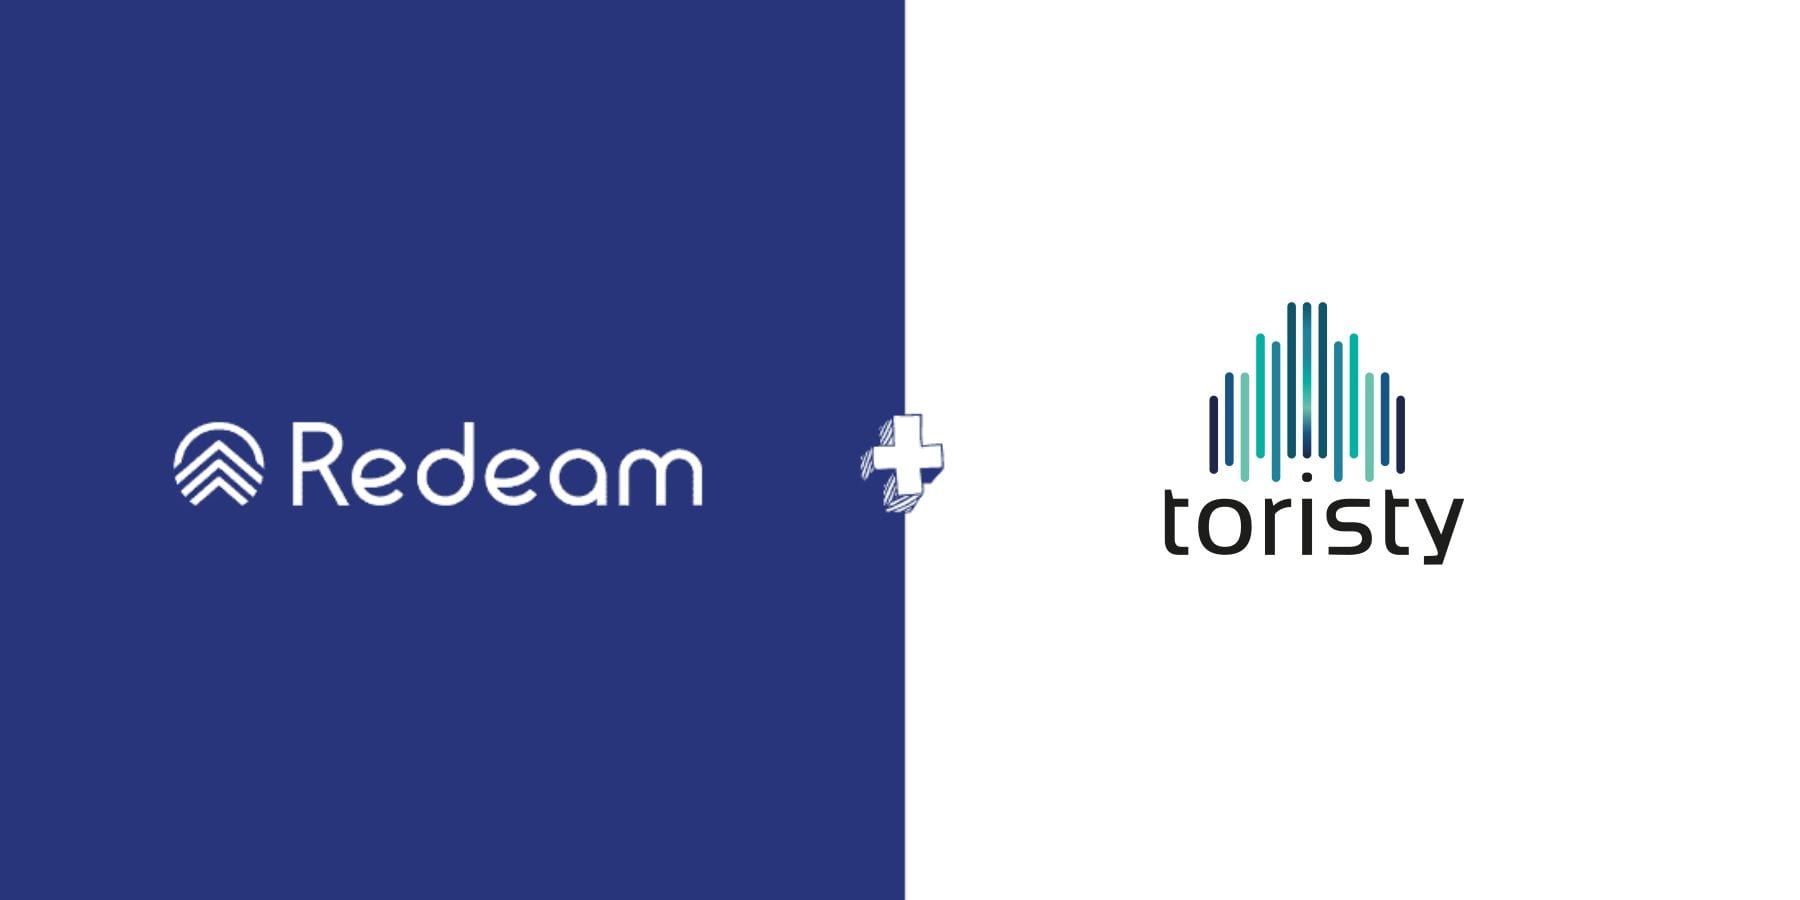 Toristy-Redeam Partnership